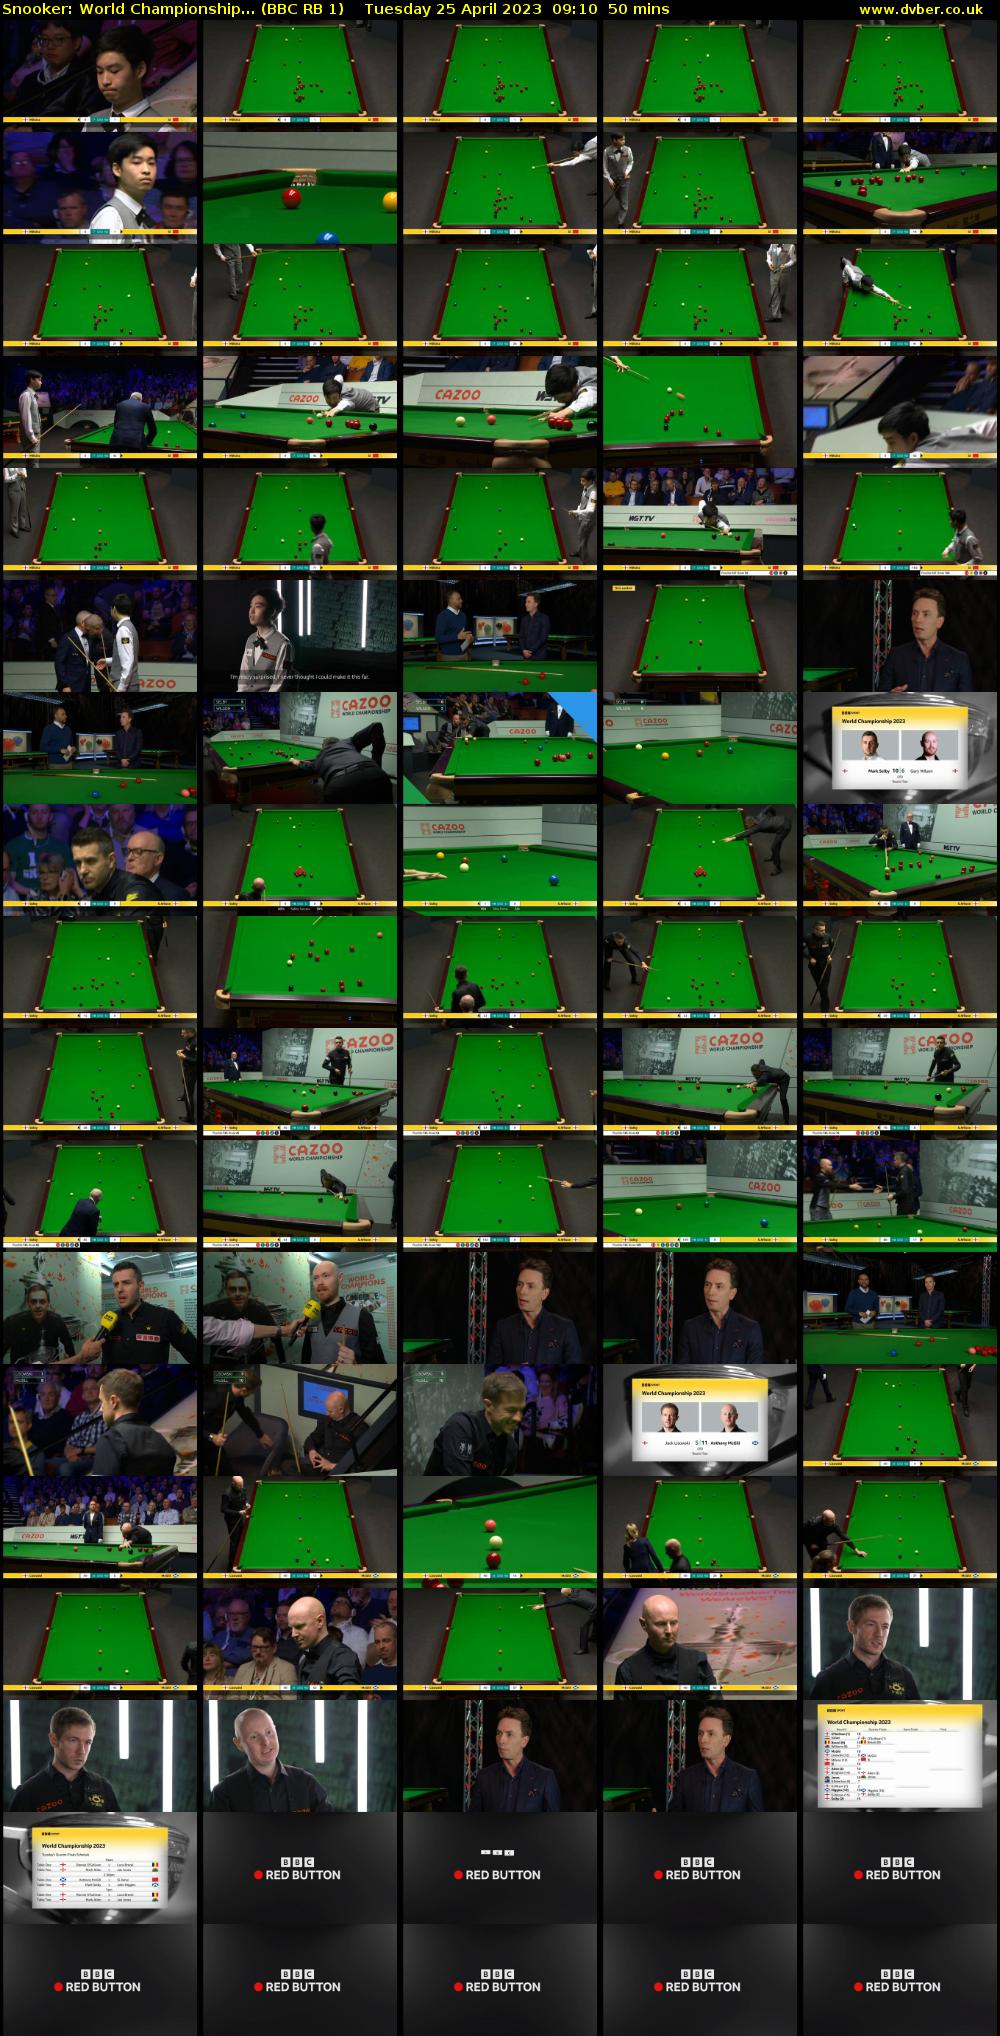 Snooker: World Championship... (BBC RB 1) Tuesday 25 April 2023 09:10 - 10:00